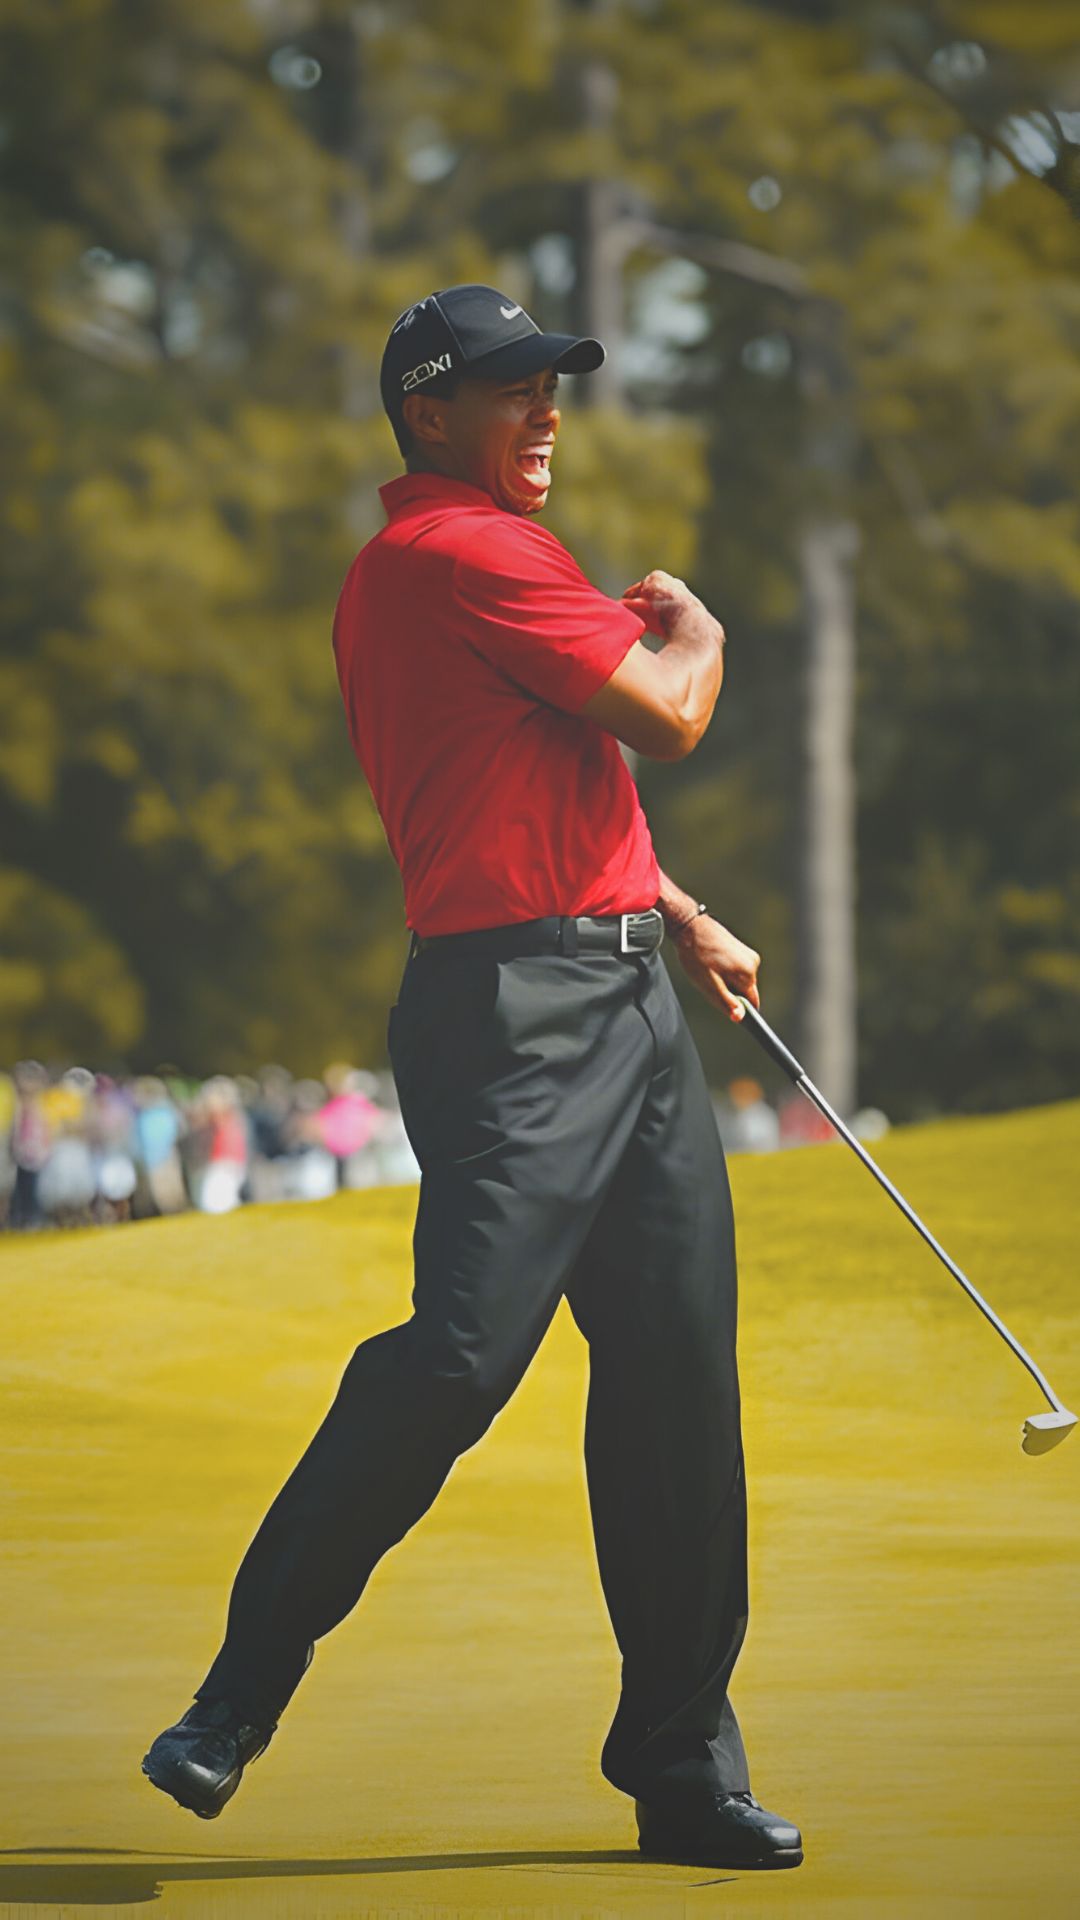 Tiger Woods Wallpaper Masters